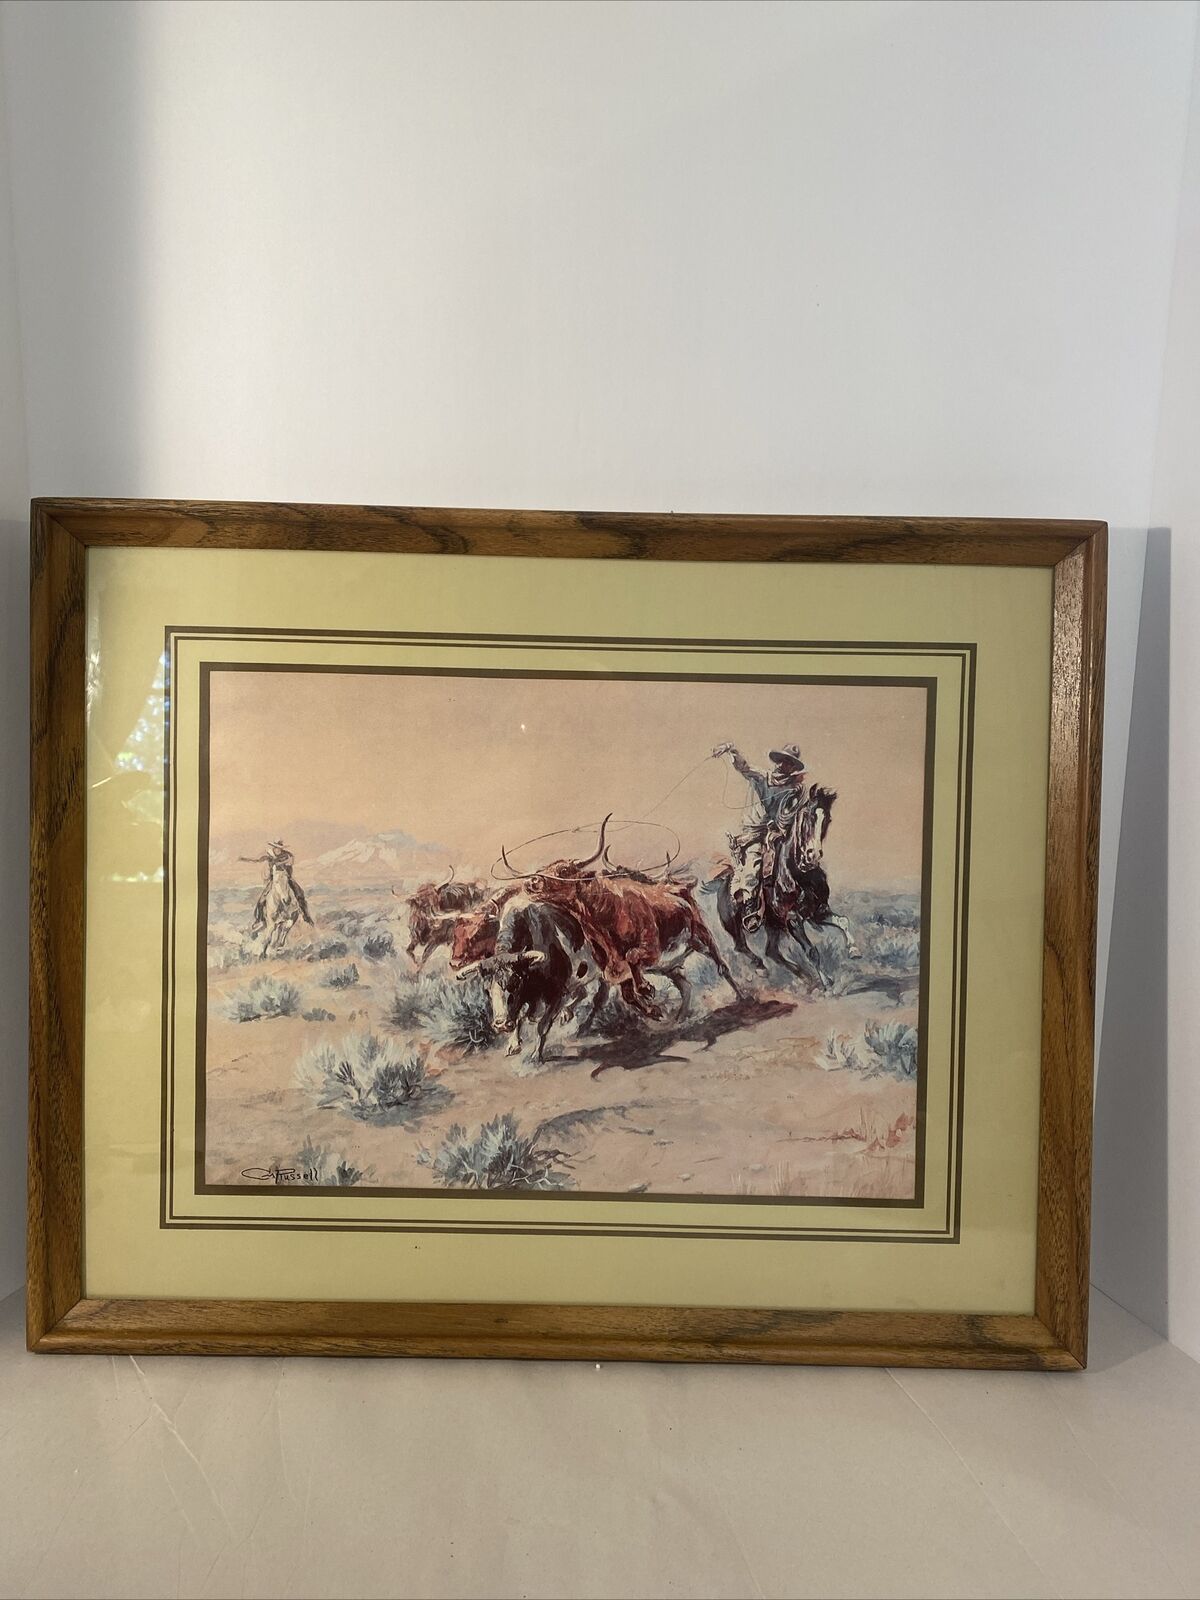 CHARLES M. RUSSELL WESTERN Cowboy Art Print W/ Wood Frame 20 1/4” X 16 1/4”